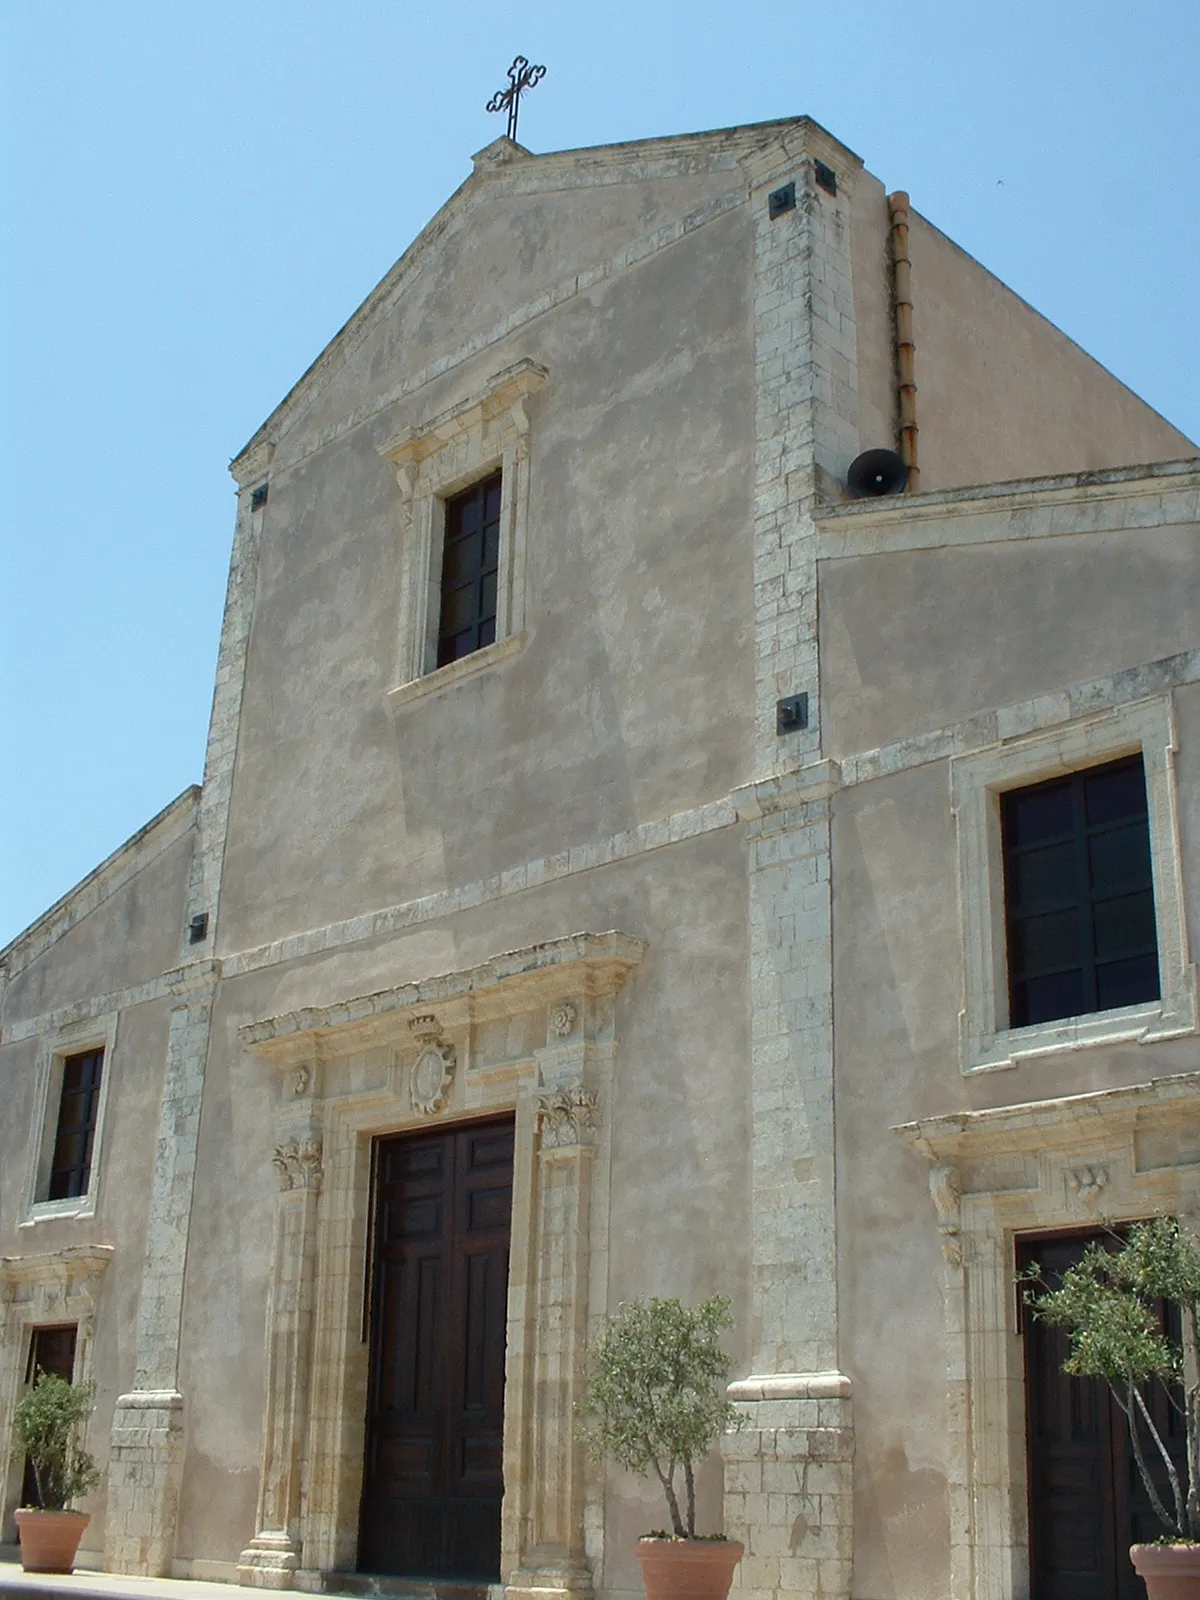 Photo showing: Facade of Saint Nicholas Church in Melilli, Sicily, Italy